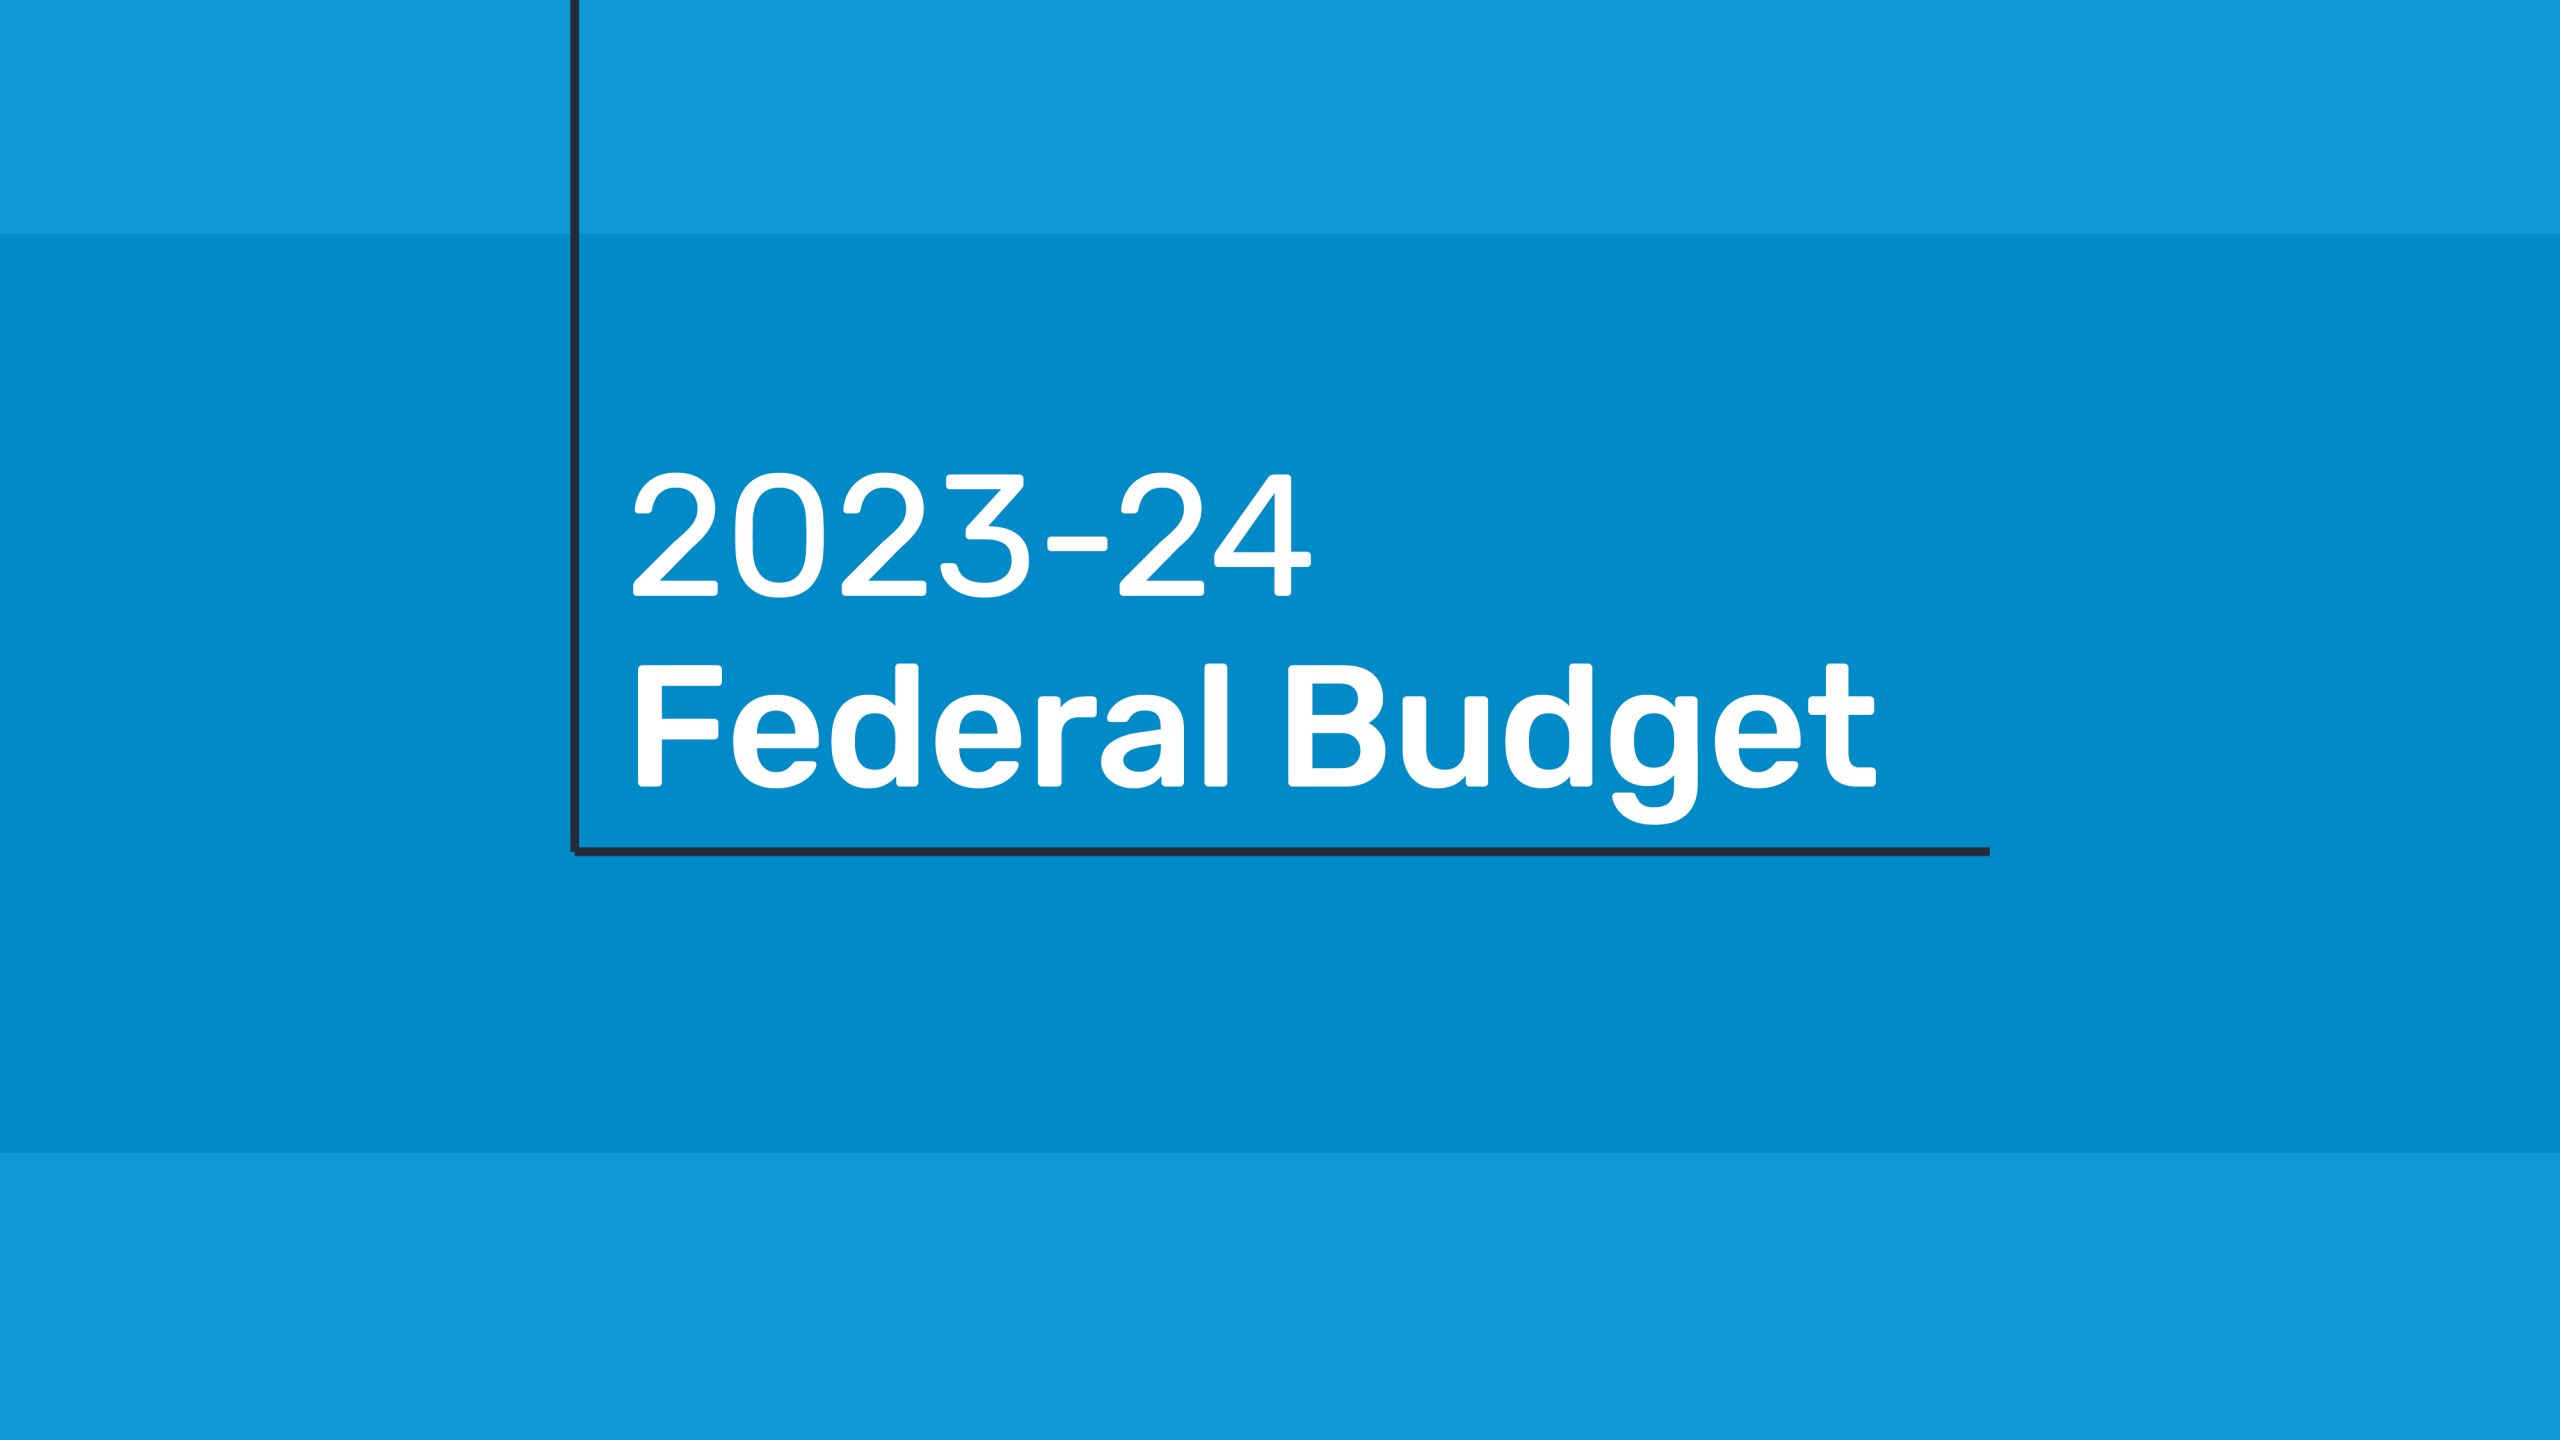 "2023-24 Federal Budget"